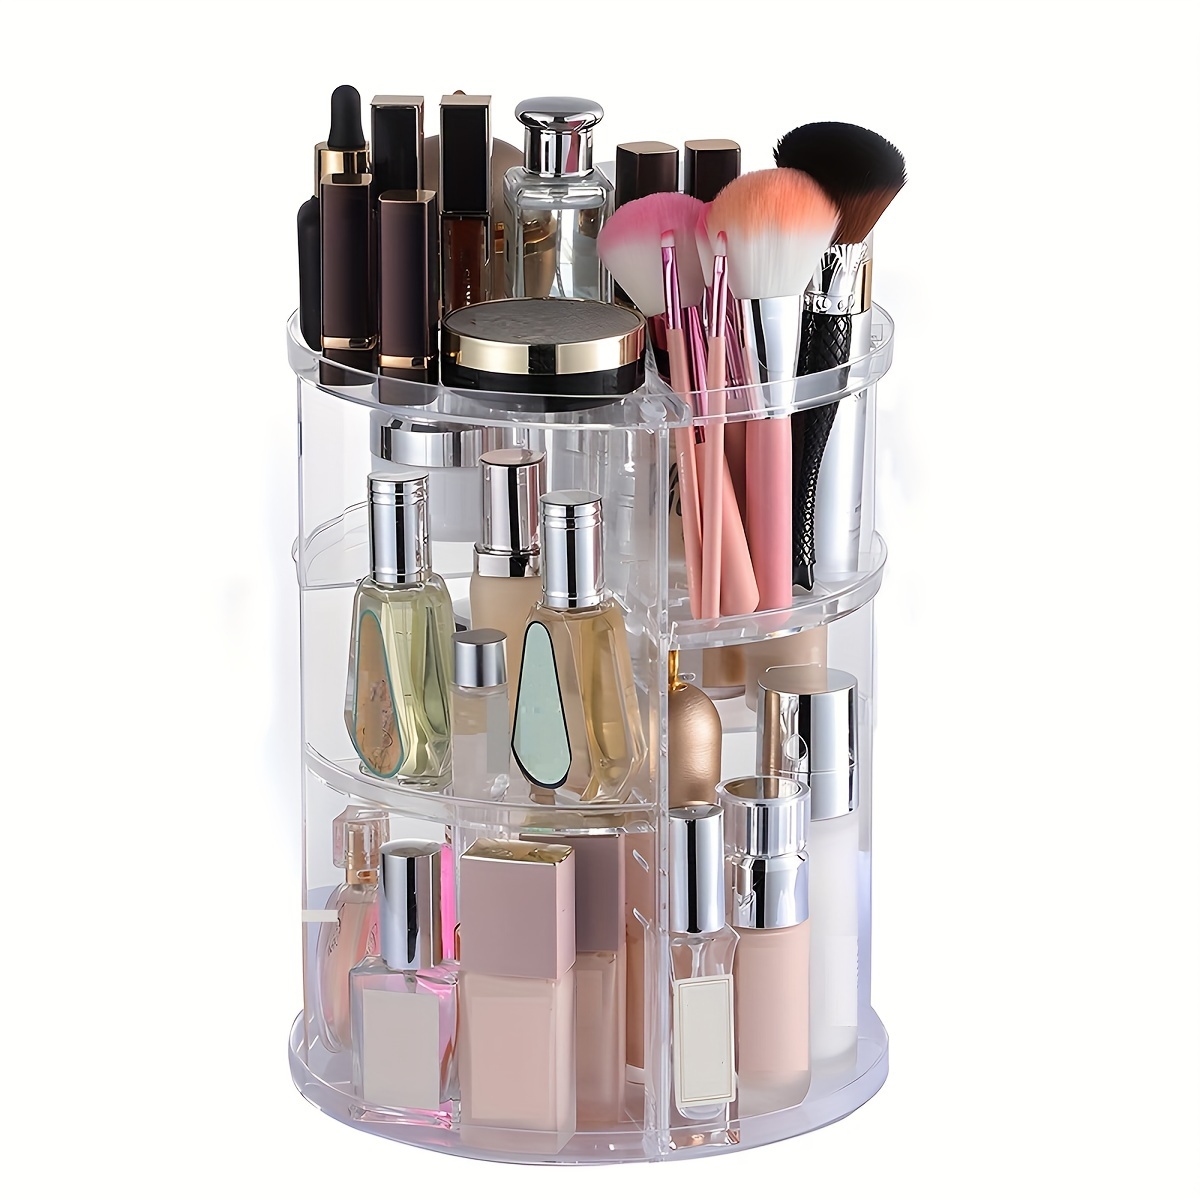 Preppy Aesthetic Skincare & Makeup Organizer Storage Drawer – The